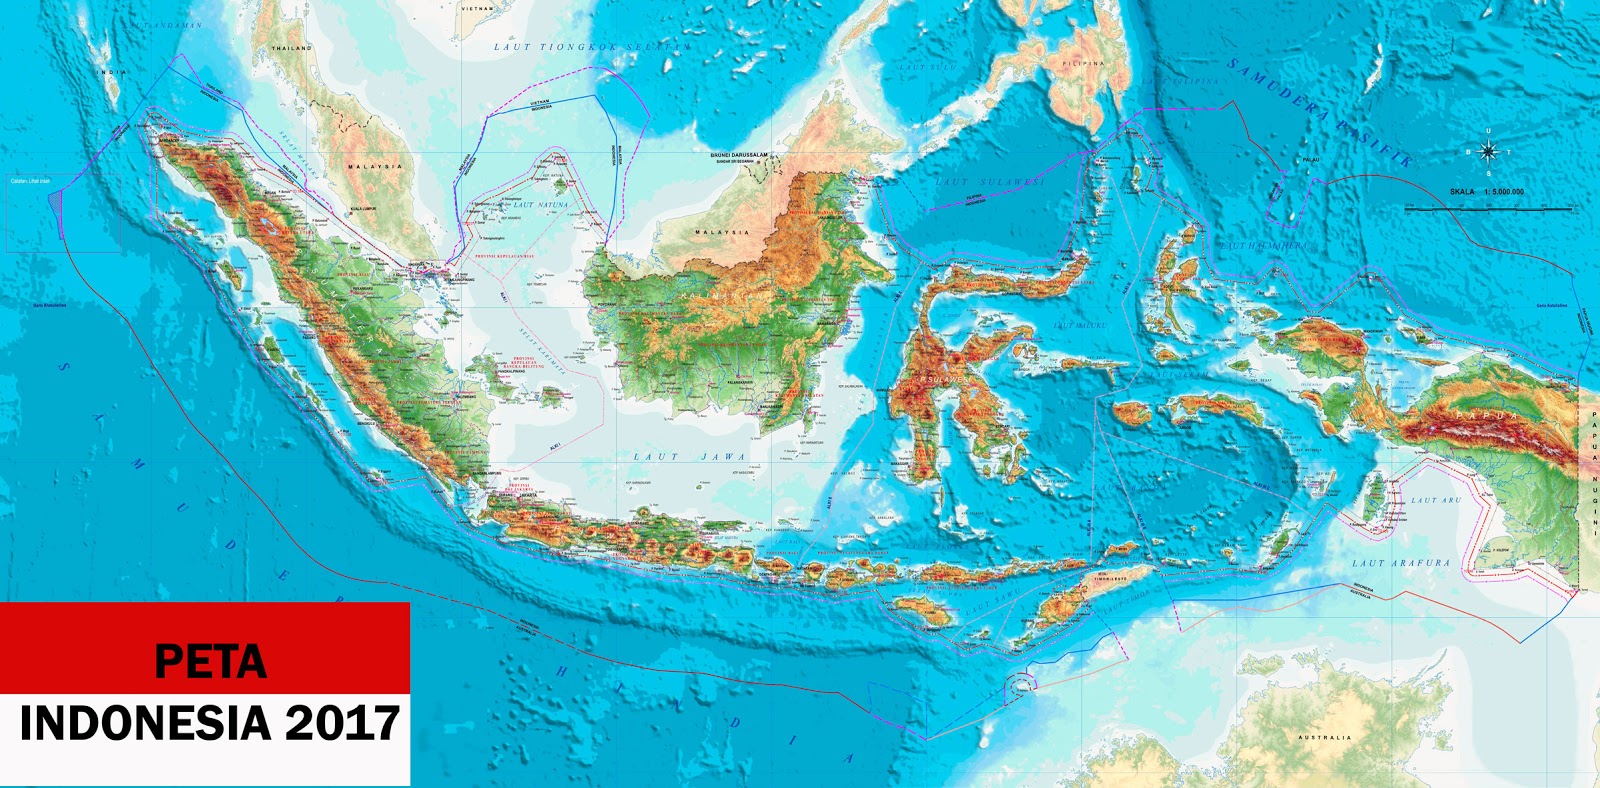 Peta Indonesia Terbaru 2017 Lengkap dan Jelas  Sejarah Negara Com